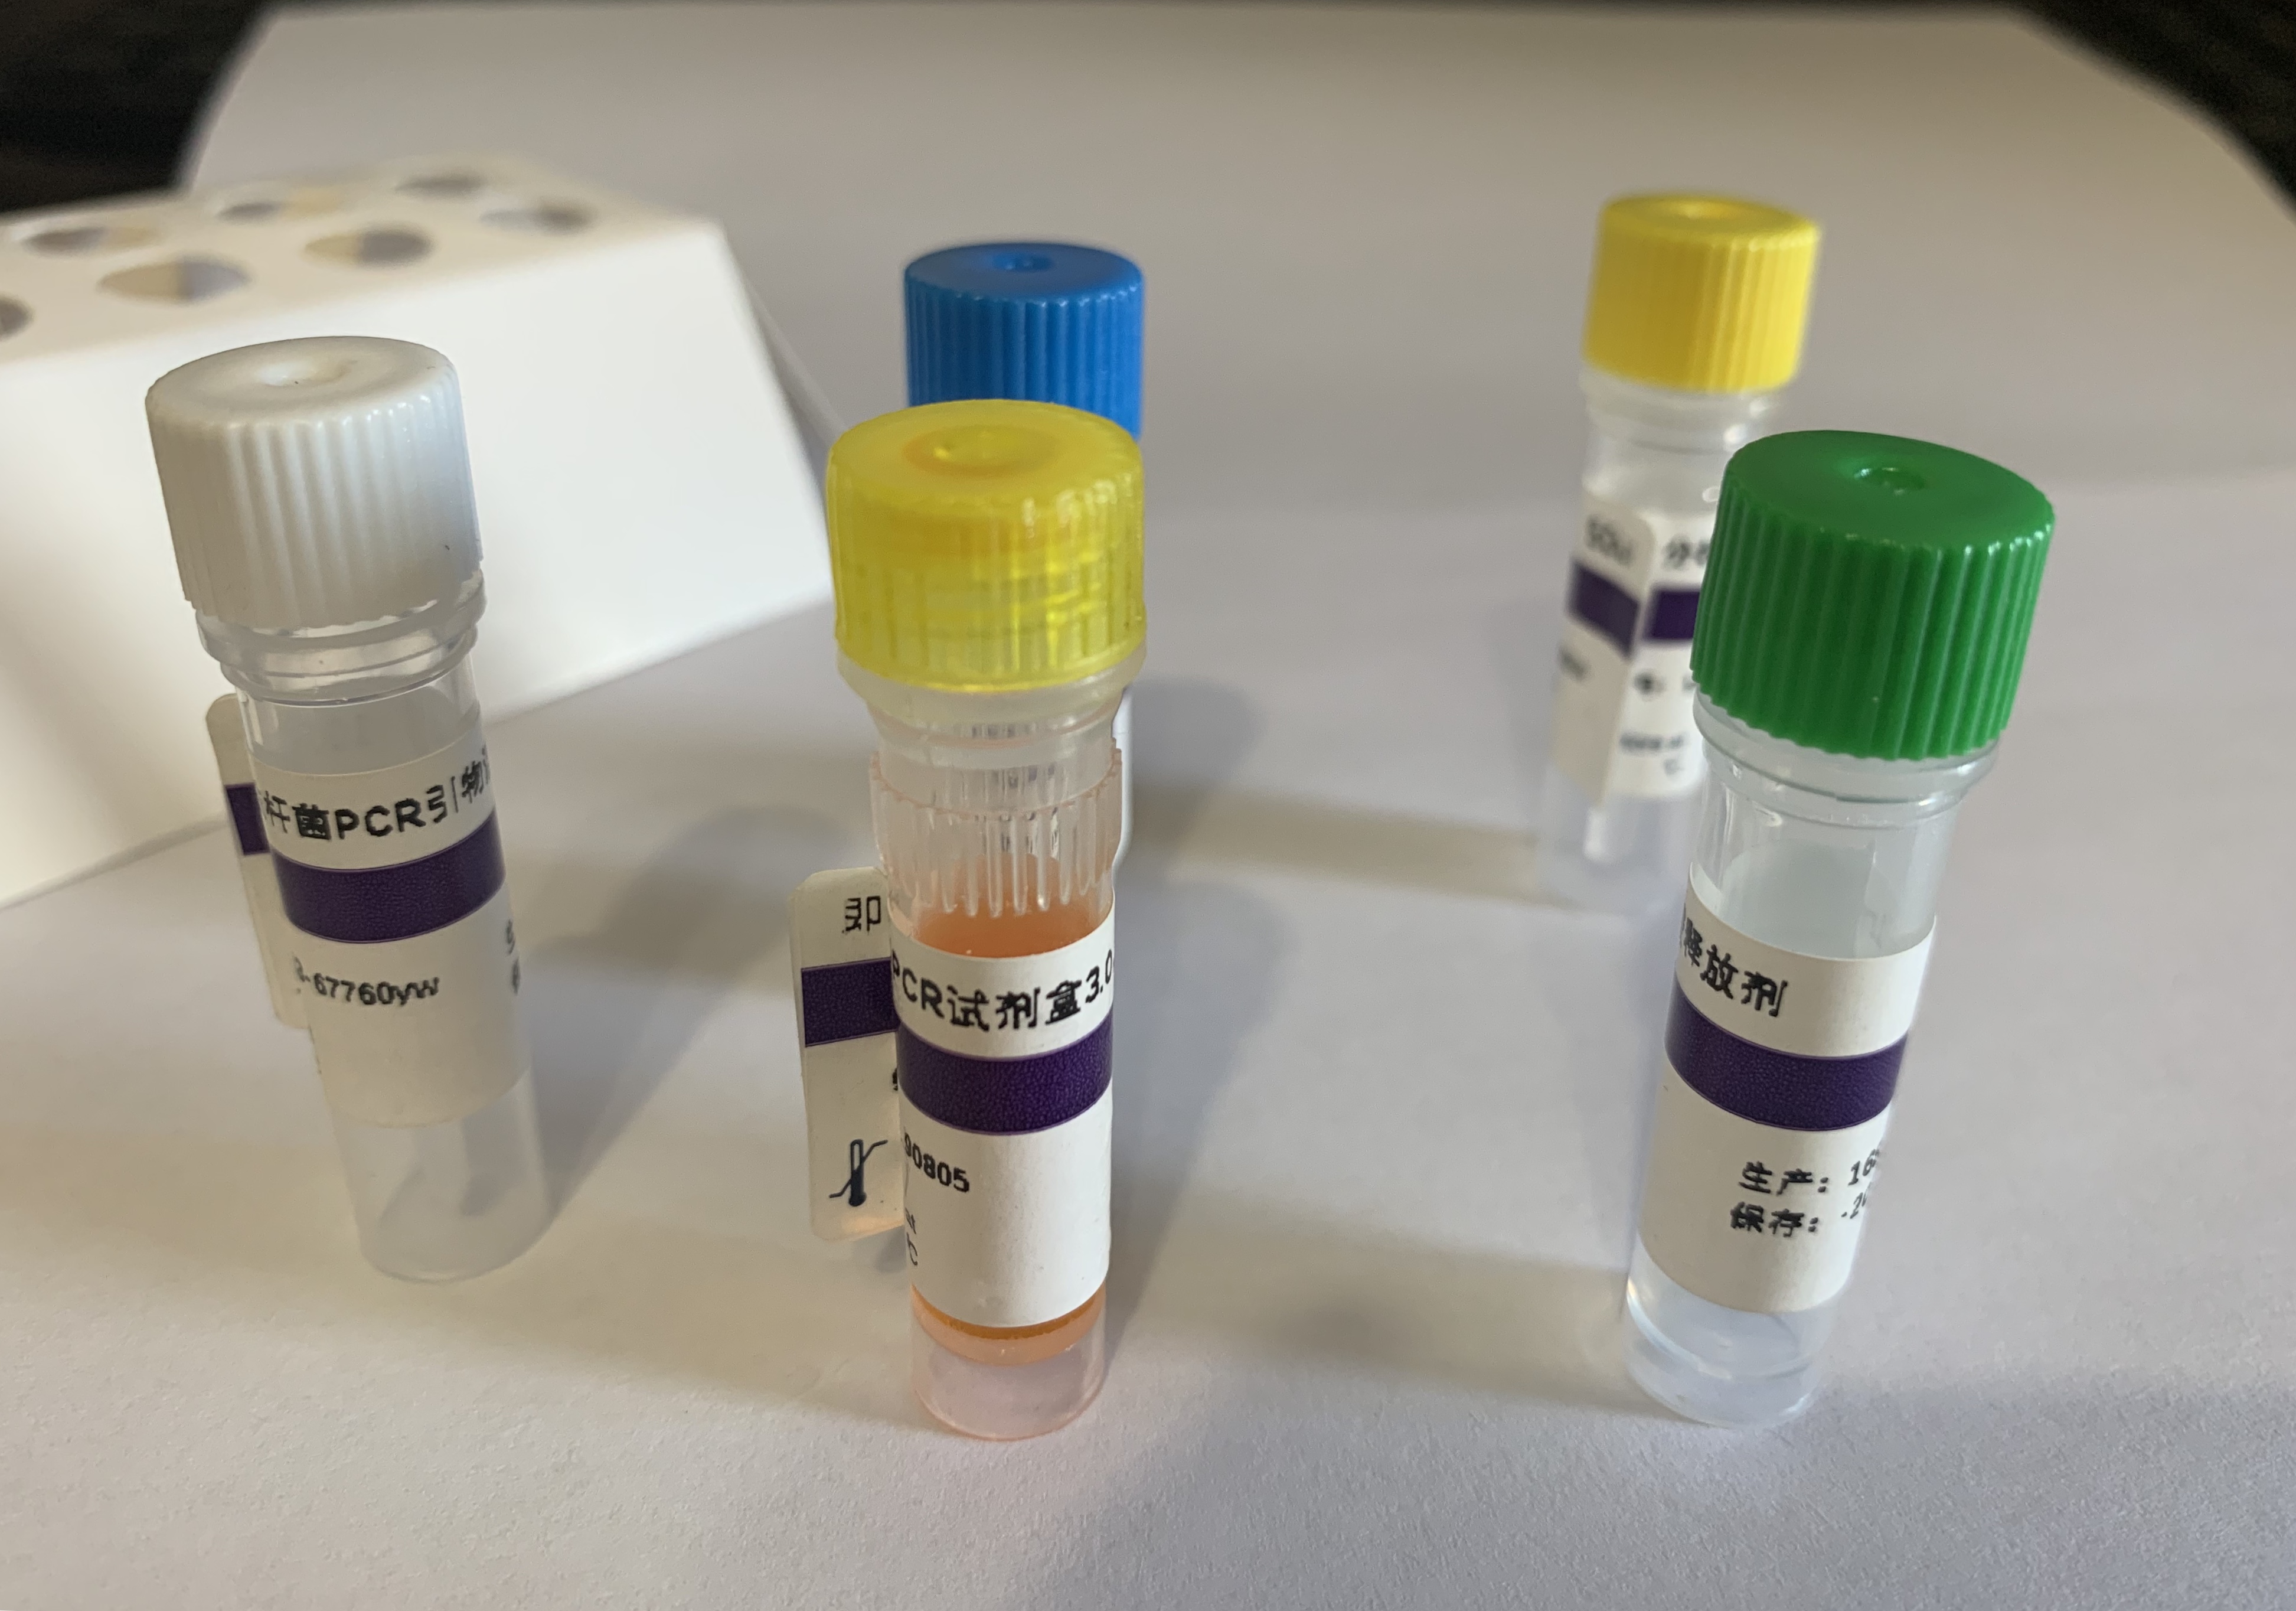 HIV-2前病毒染料法荧光定量PCR试剂盒